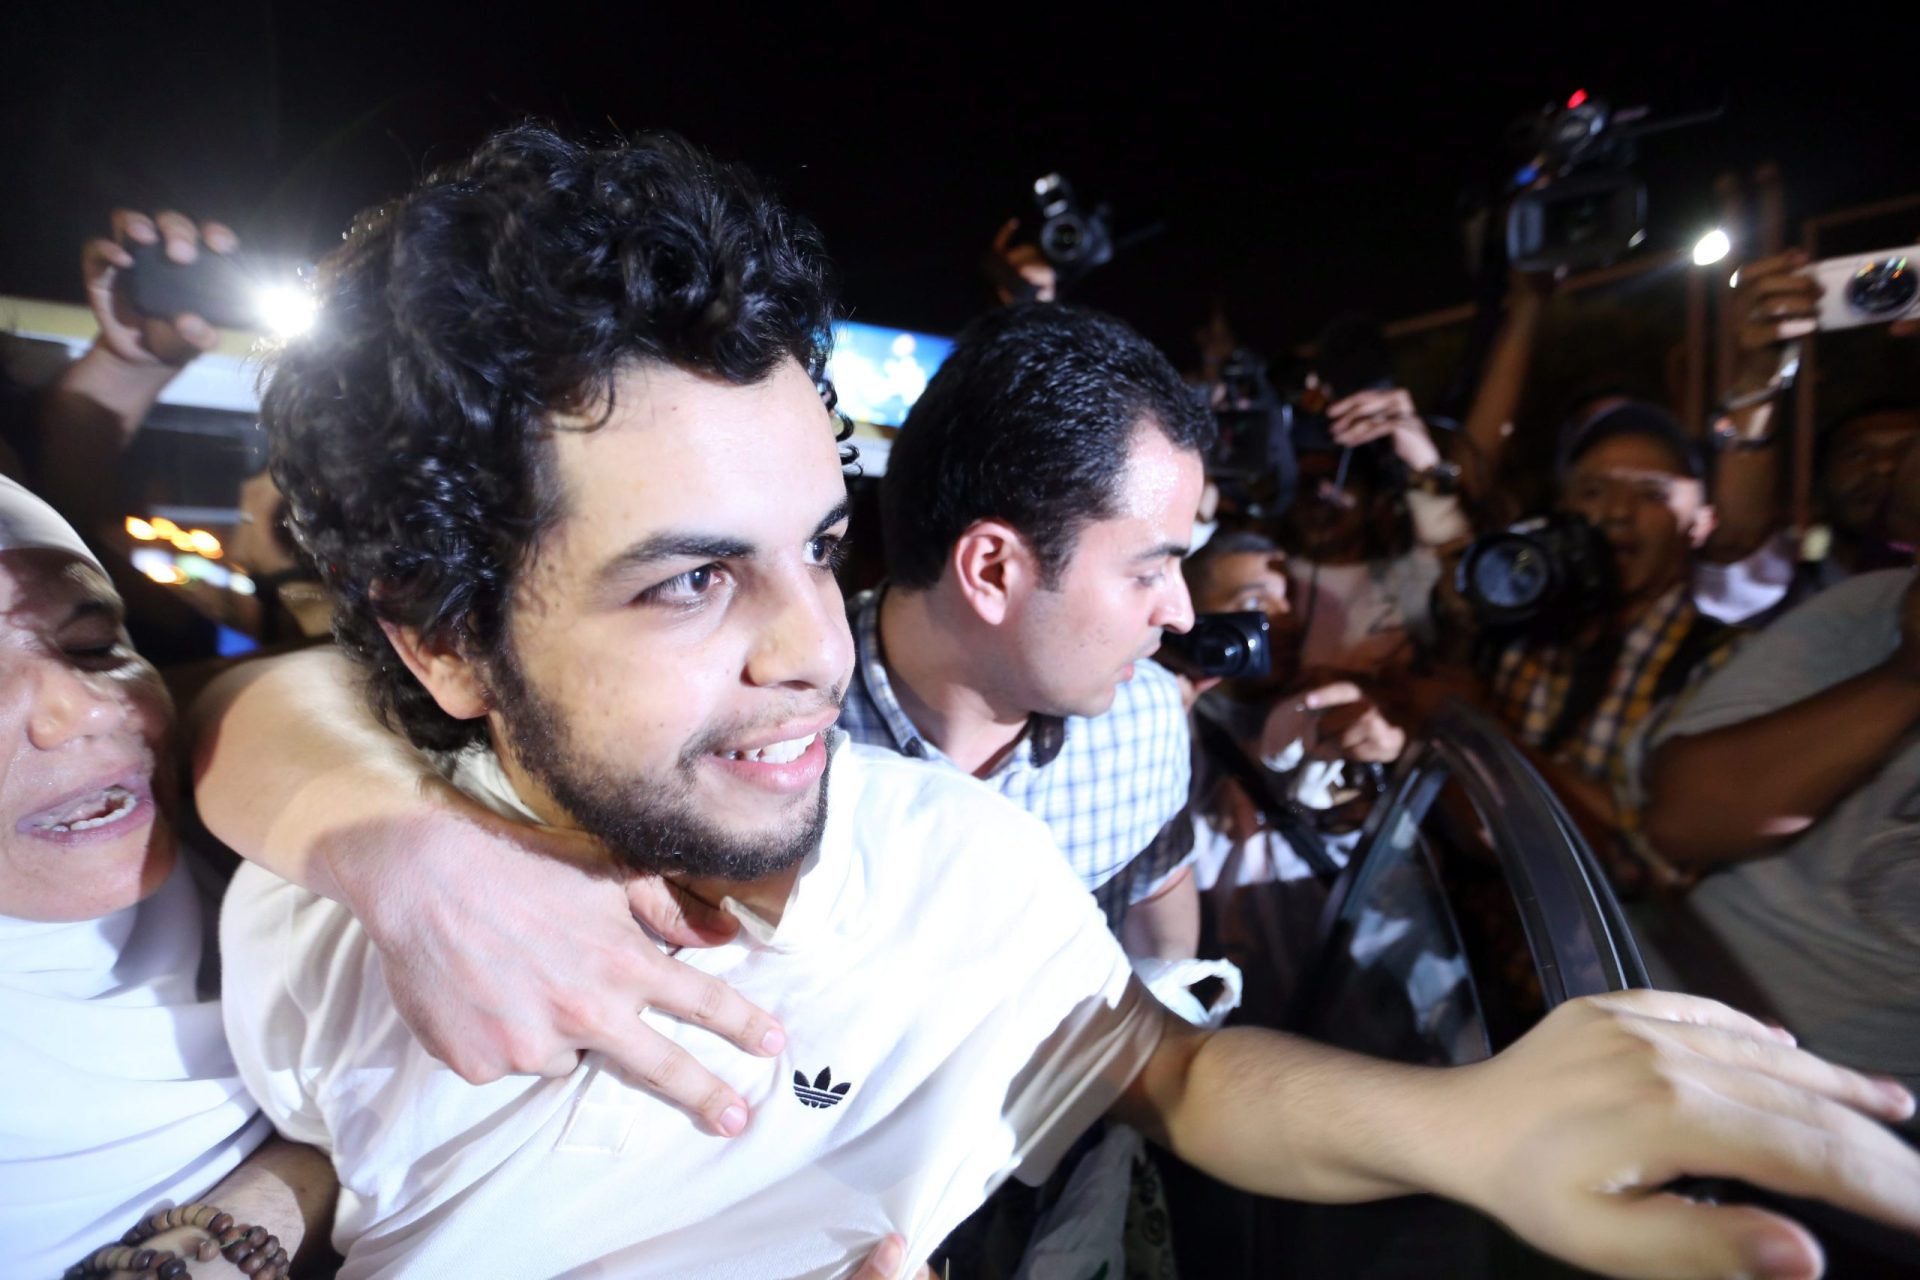 Jornalista libertado após dez meses de cativeiro